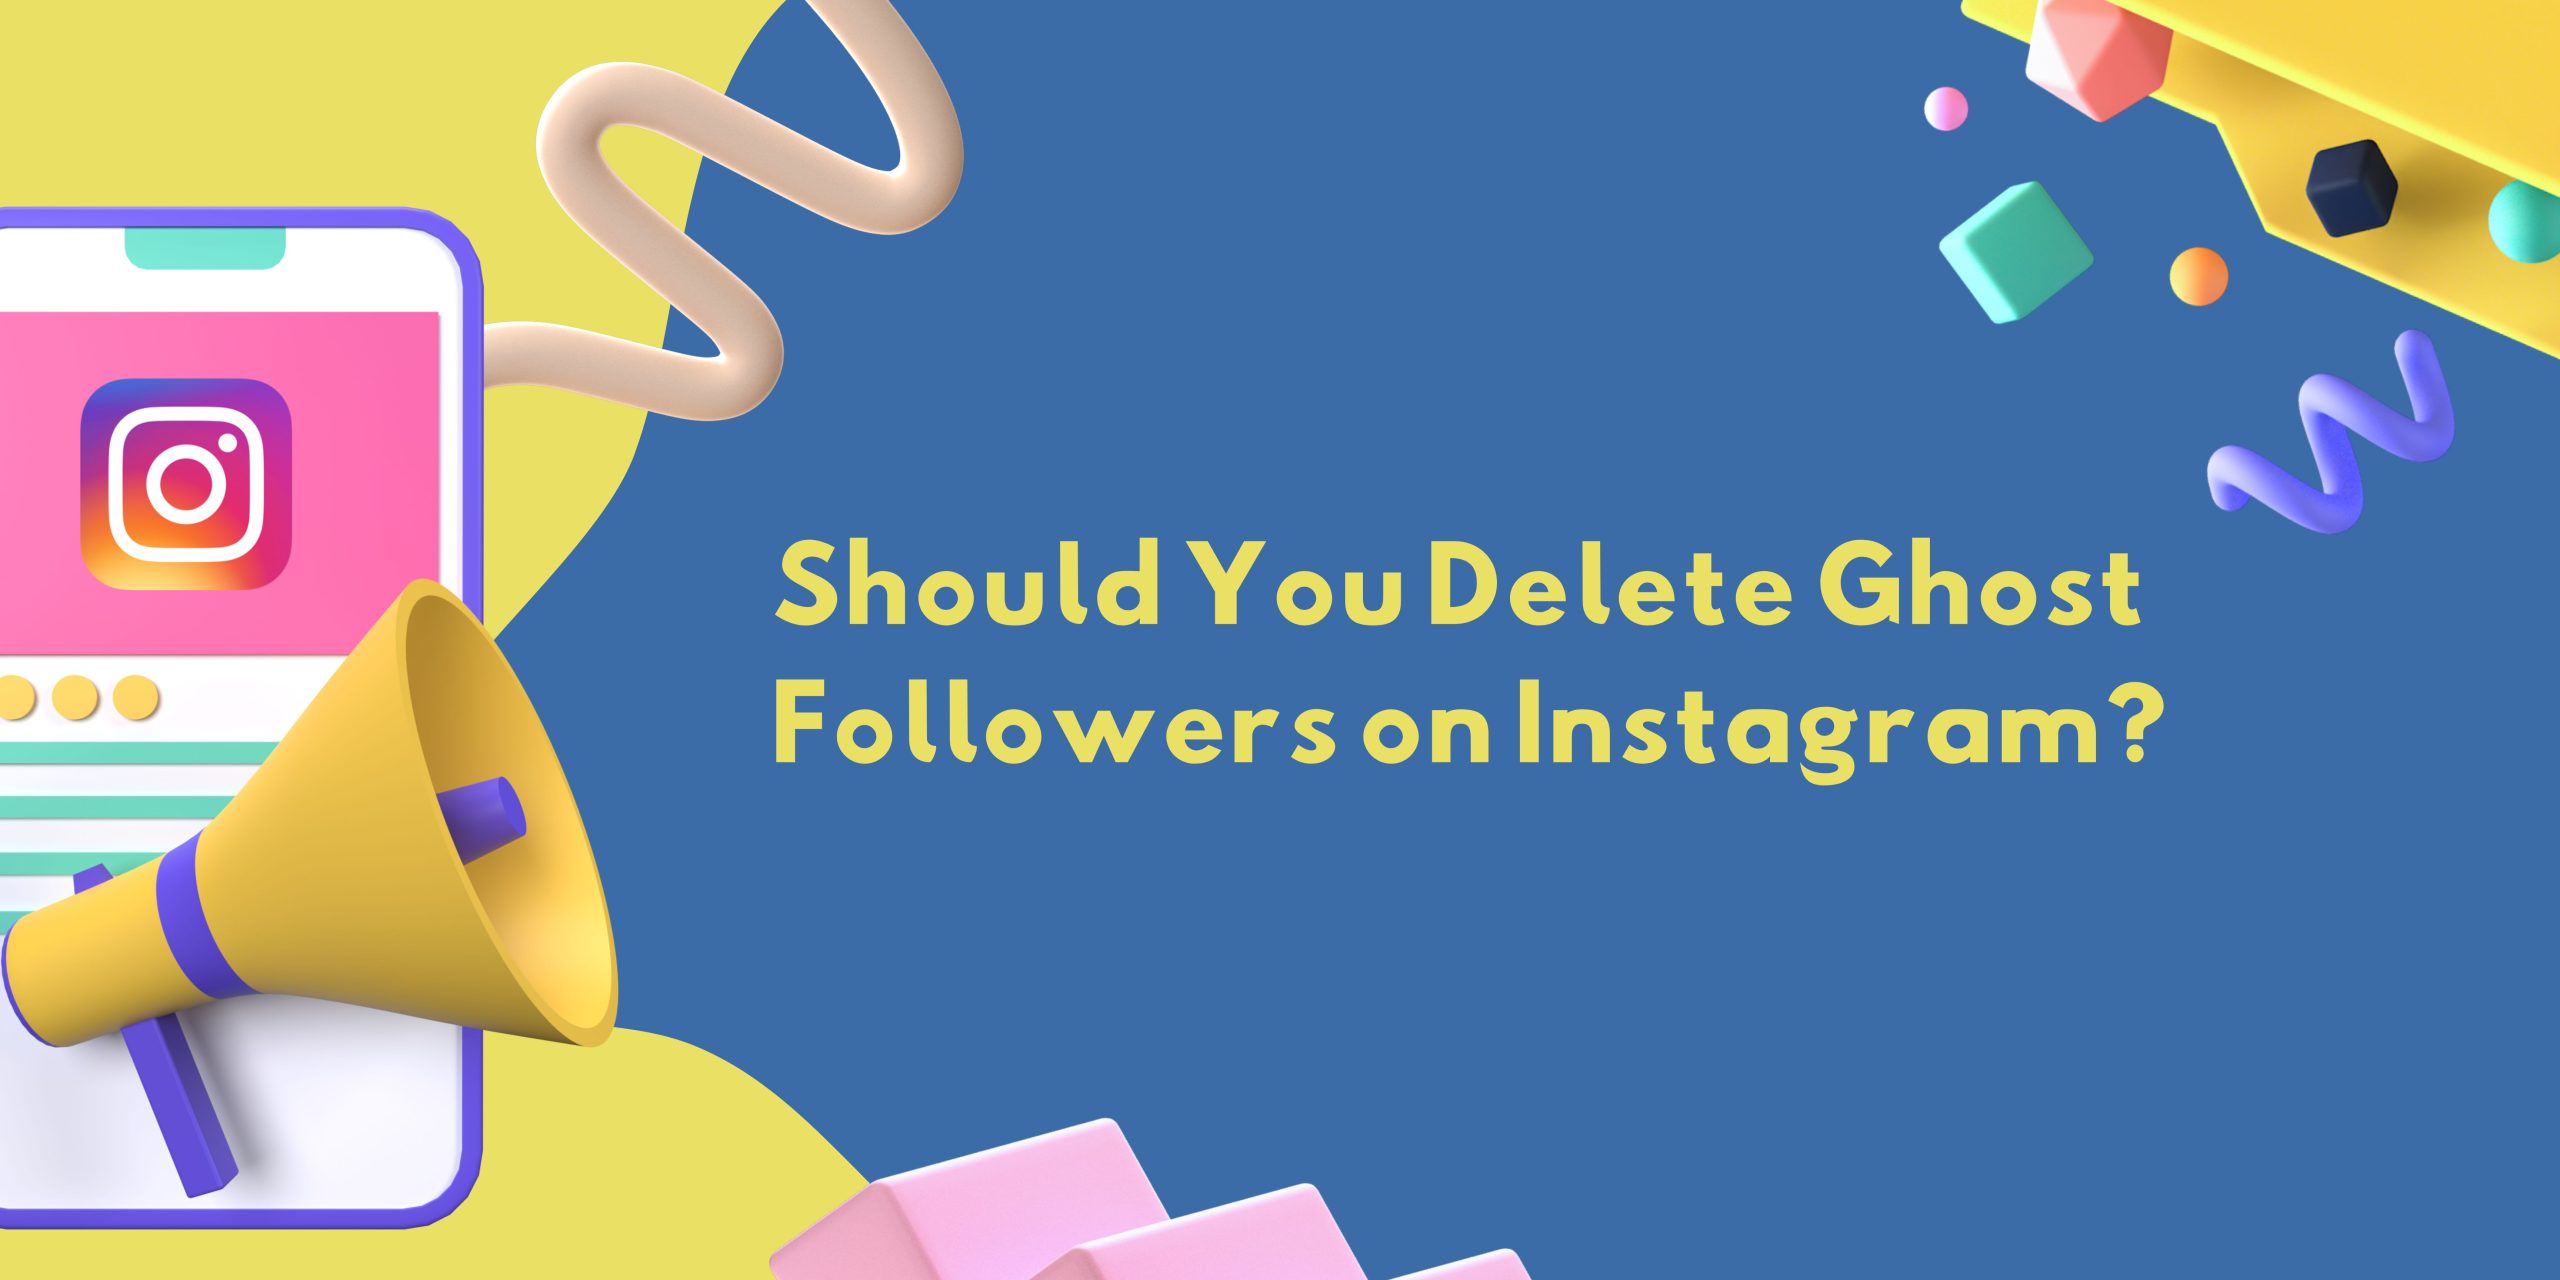 Should You Delete Ghost Followers on Instagram?